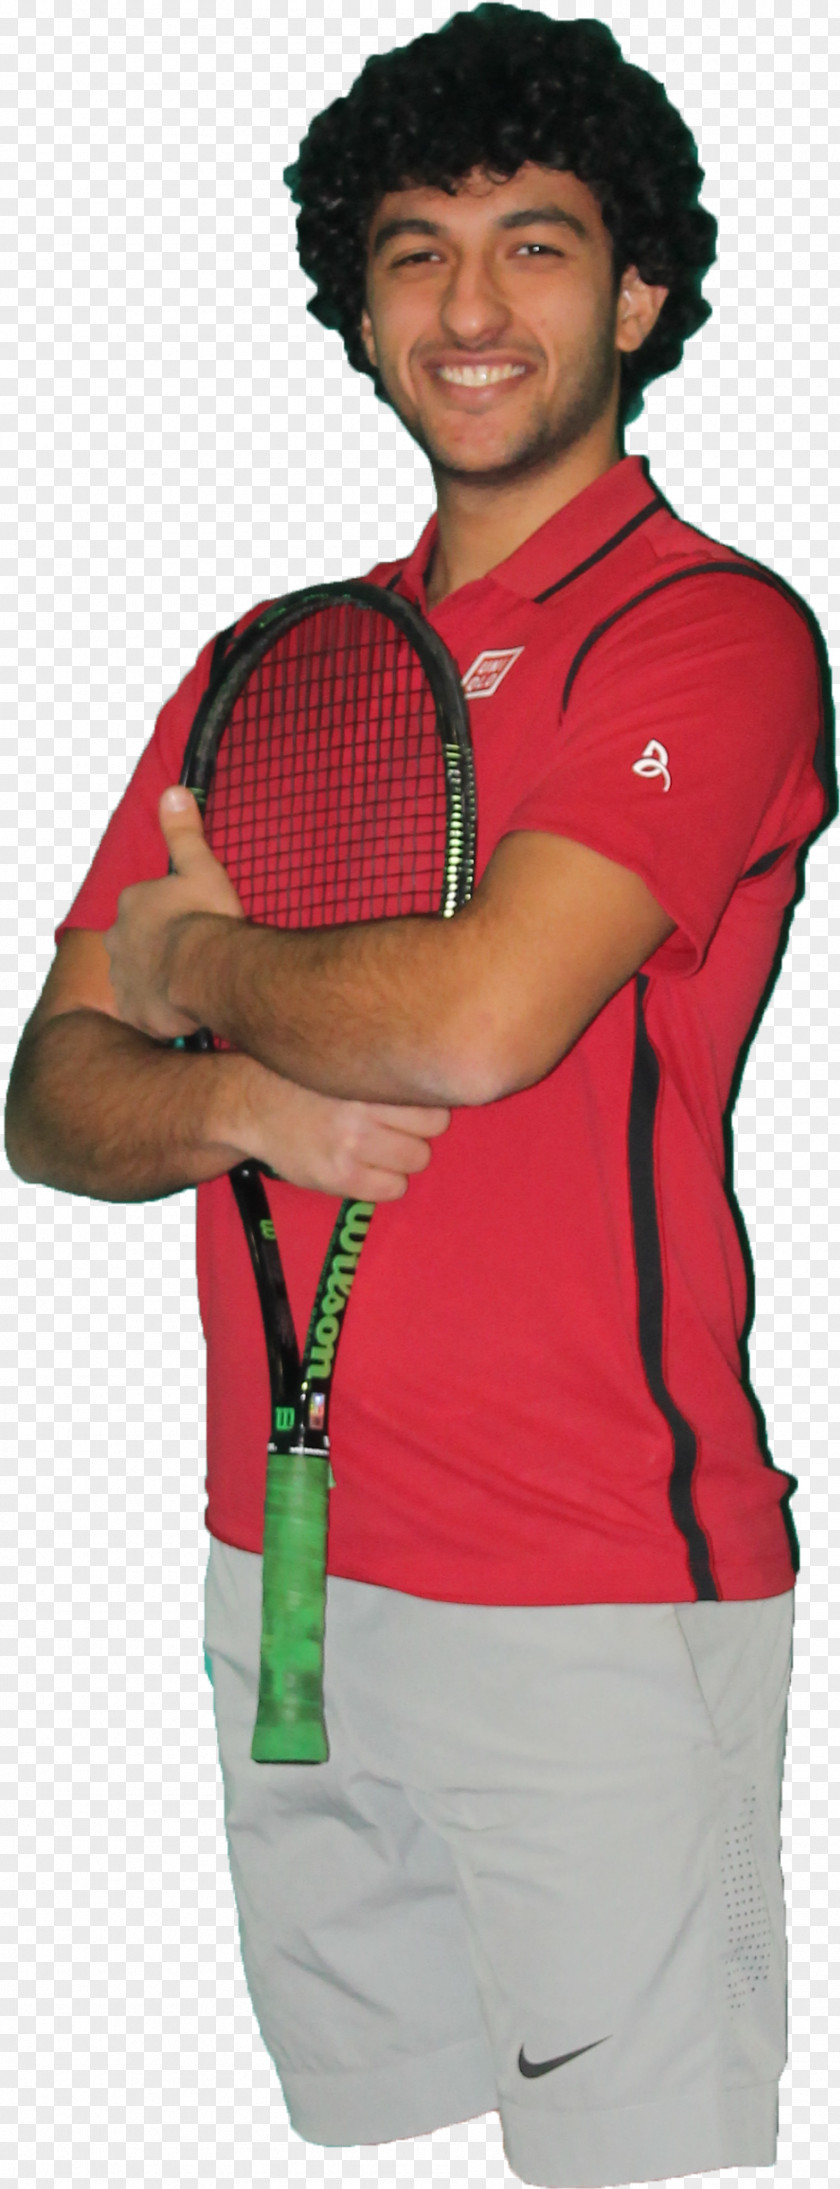 Novak Djokovic Middle East Technical University T-shirt Tennis Sleeve Arm PNG